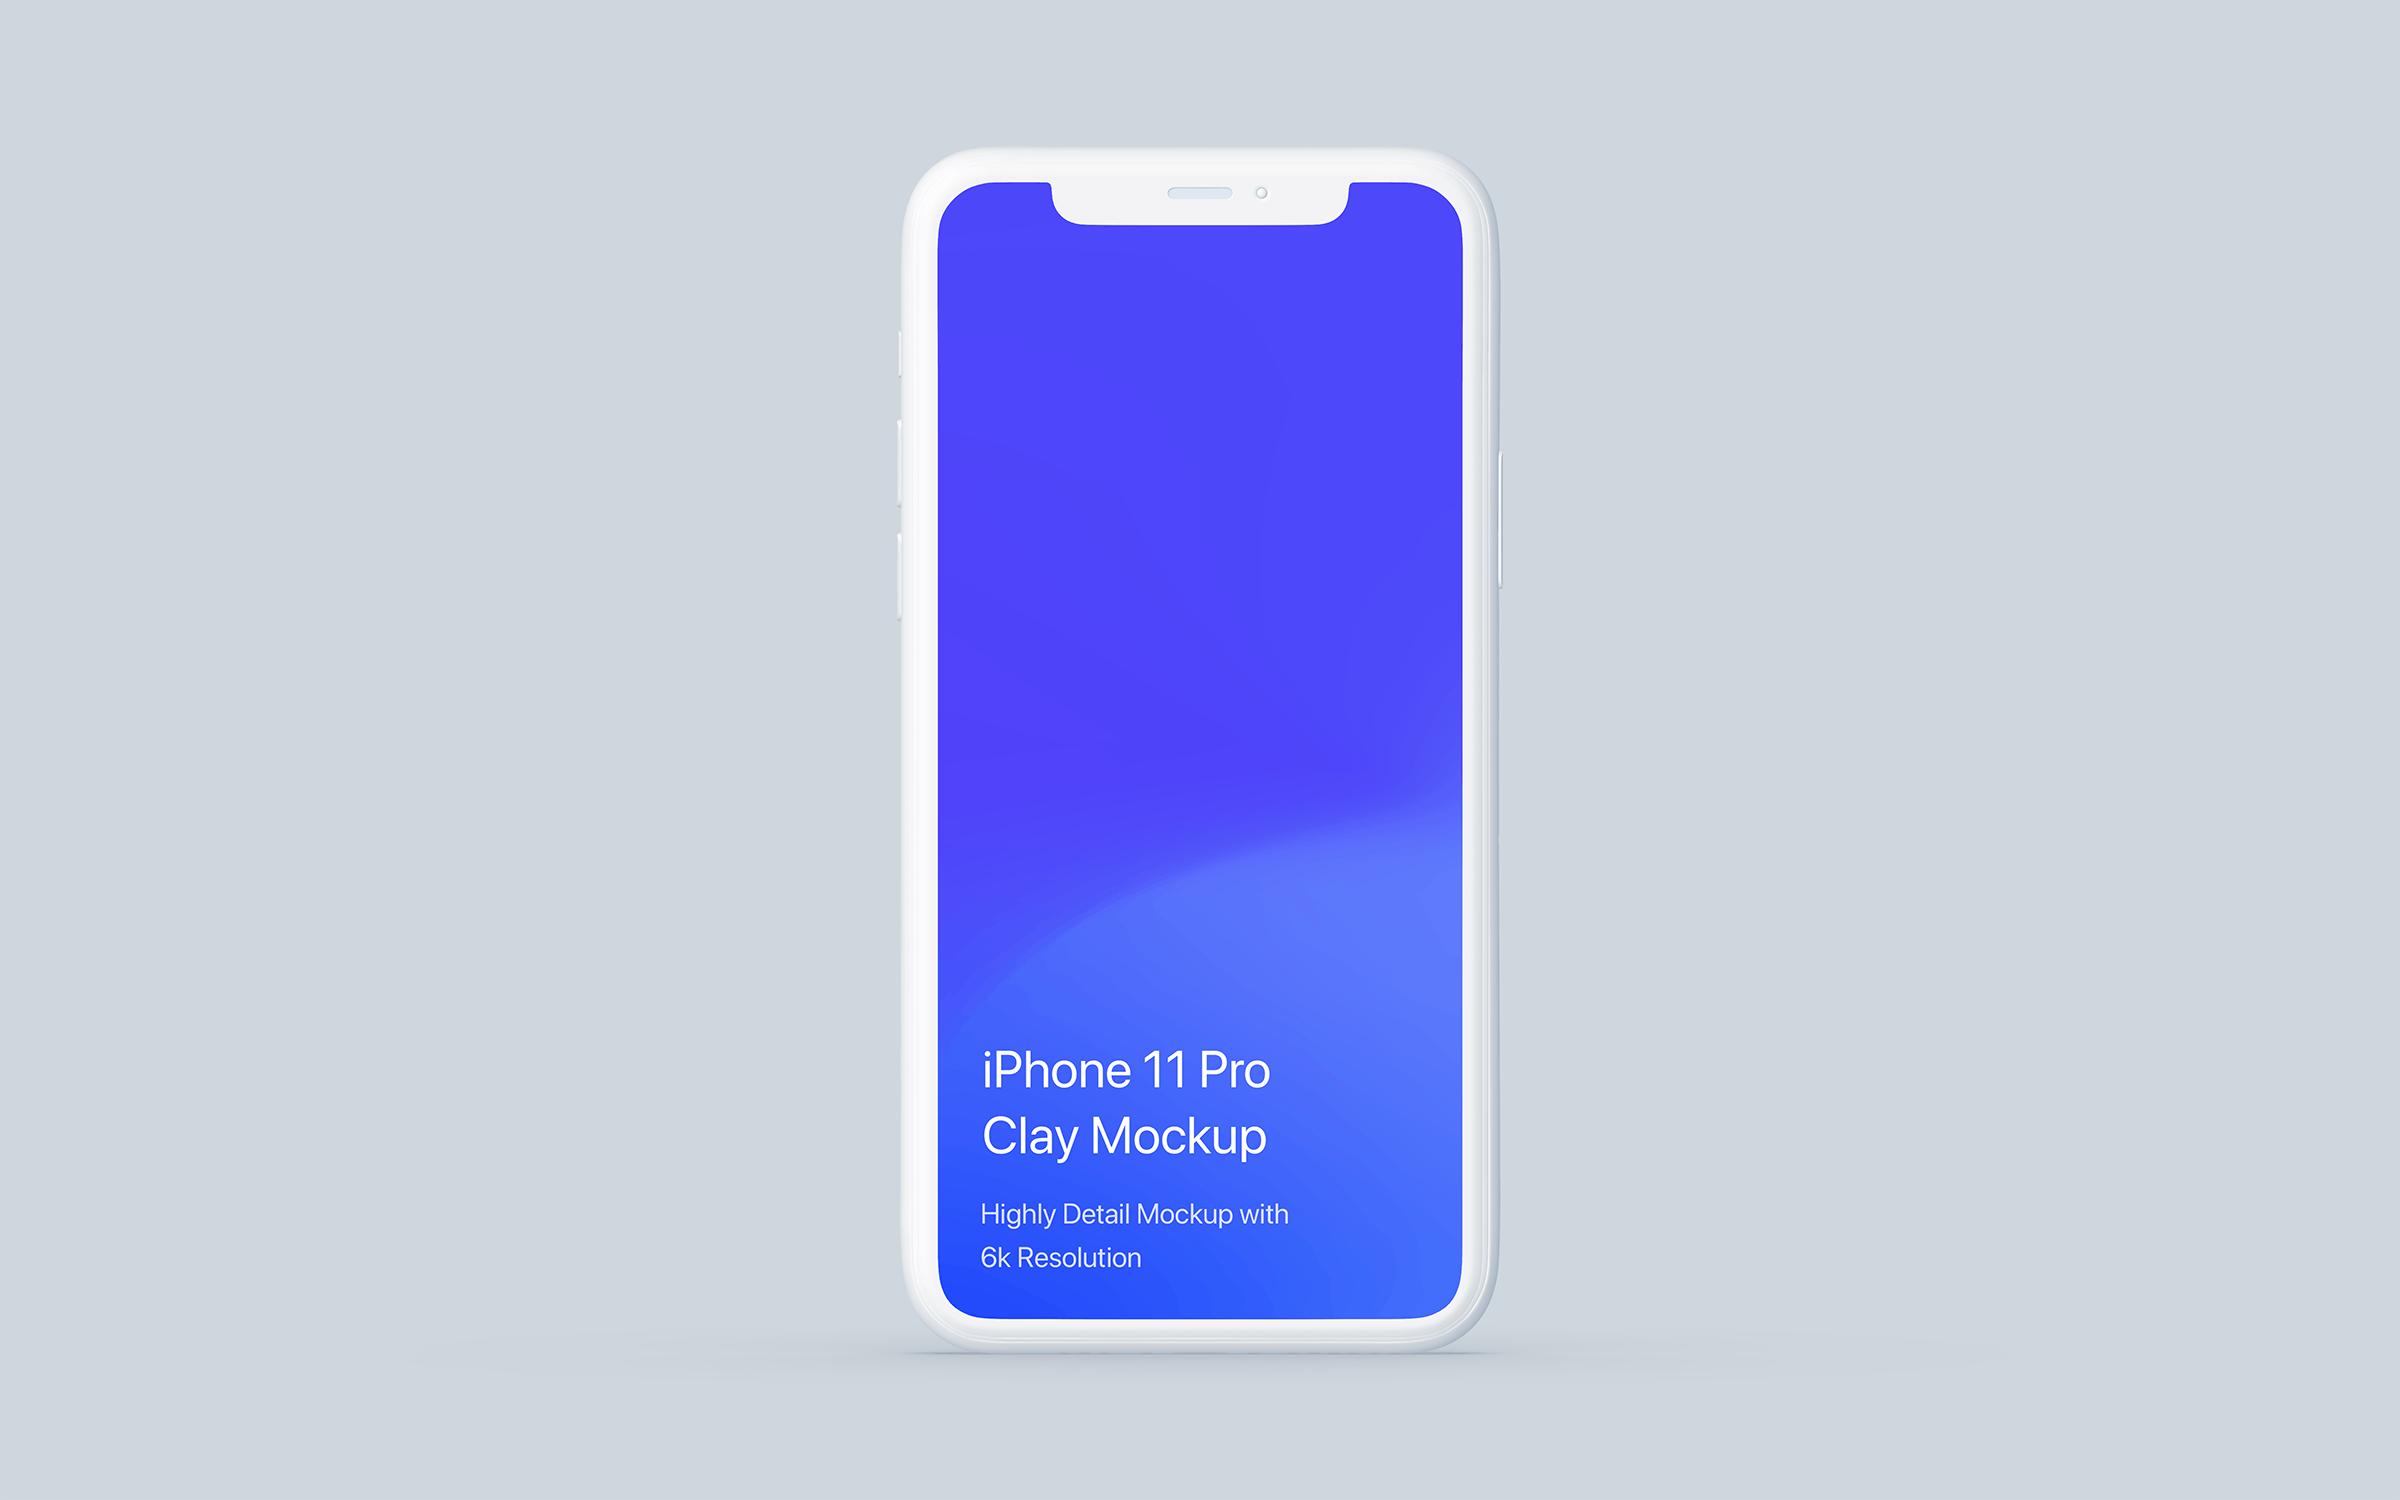 黏土陶瓷风格iPhone 11 Pro手机素材库精选样机模板 iPhone 11 Pro Mockup – Clay Mockup Pack插图(4)